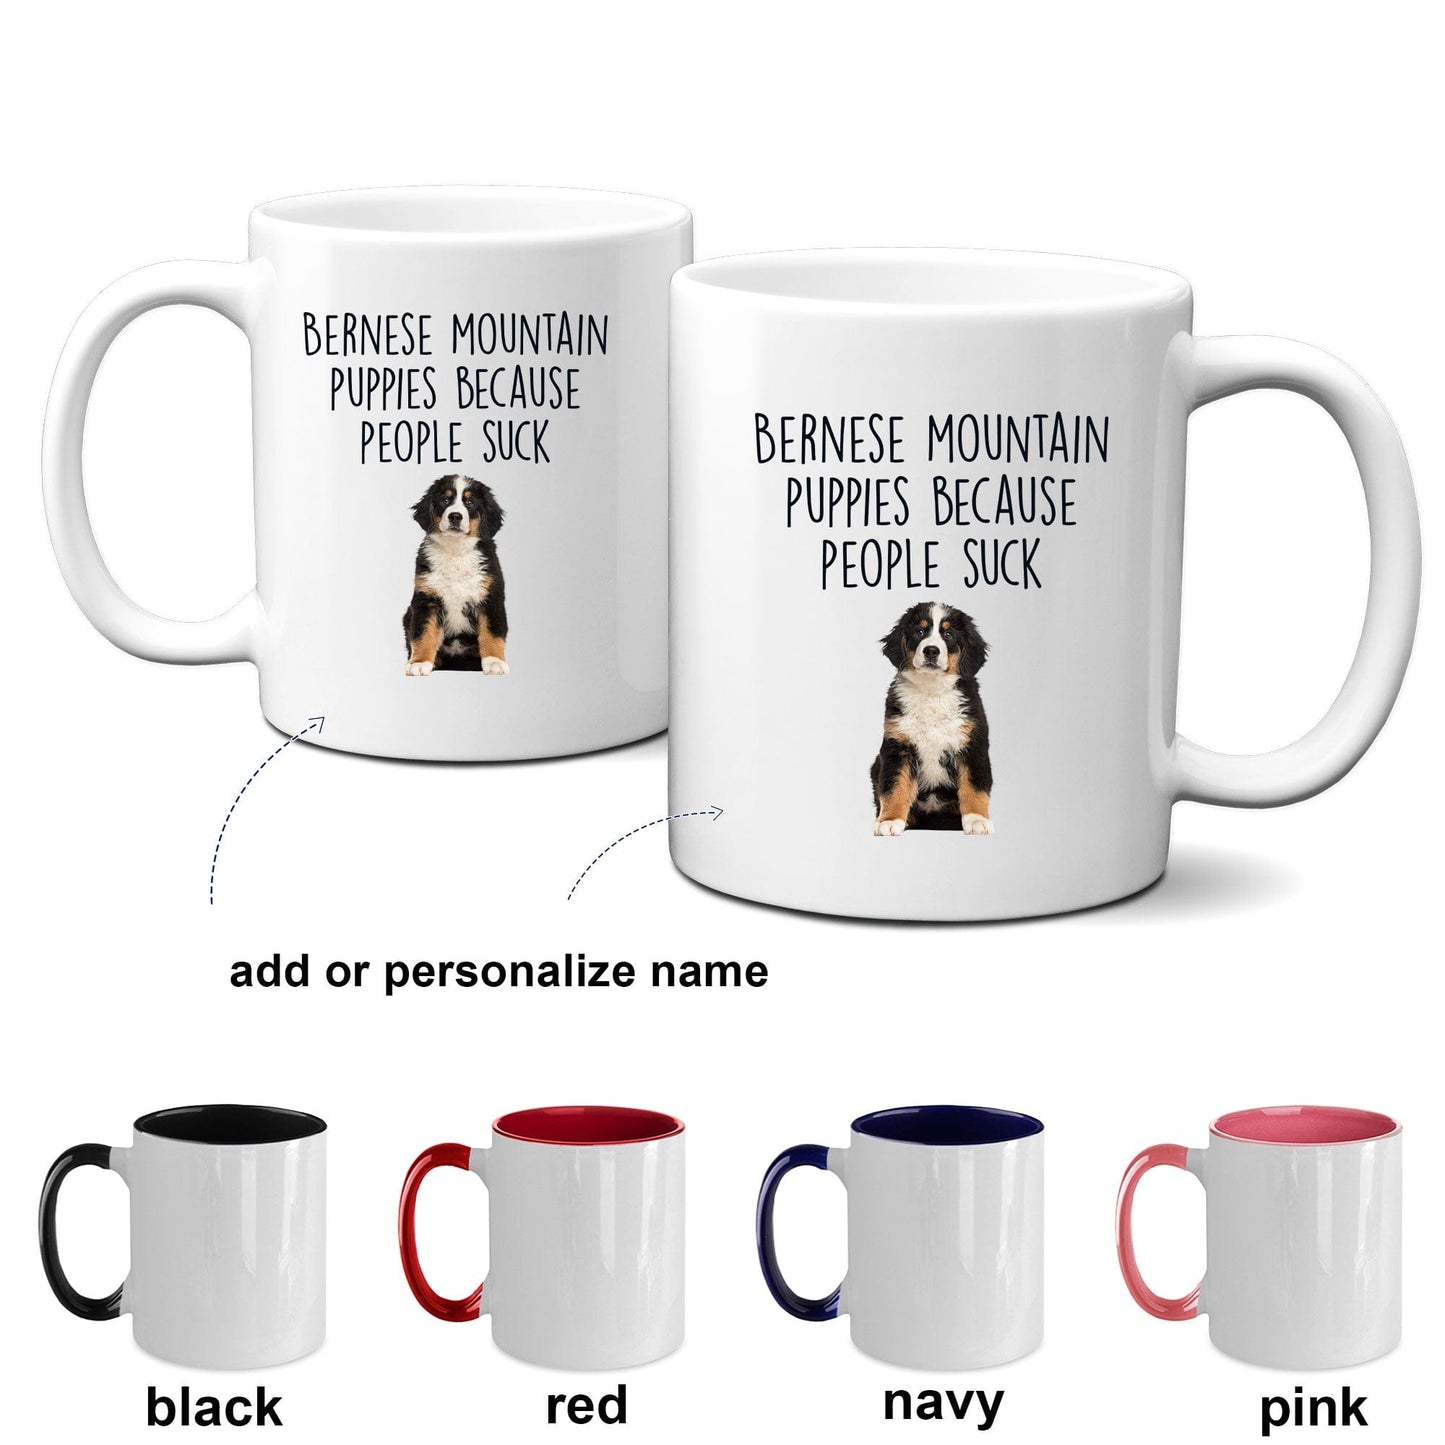 Bernese Mountain Puppies Because People Suck Funny Dog Custom Coffee Mug